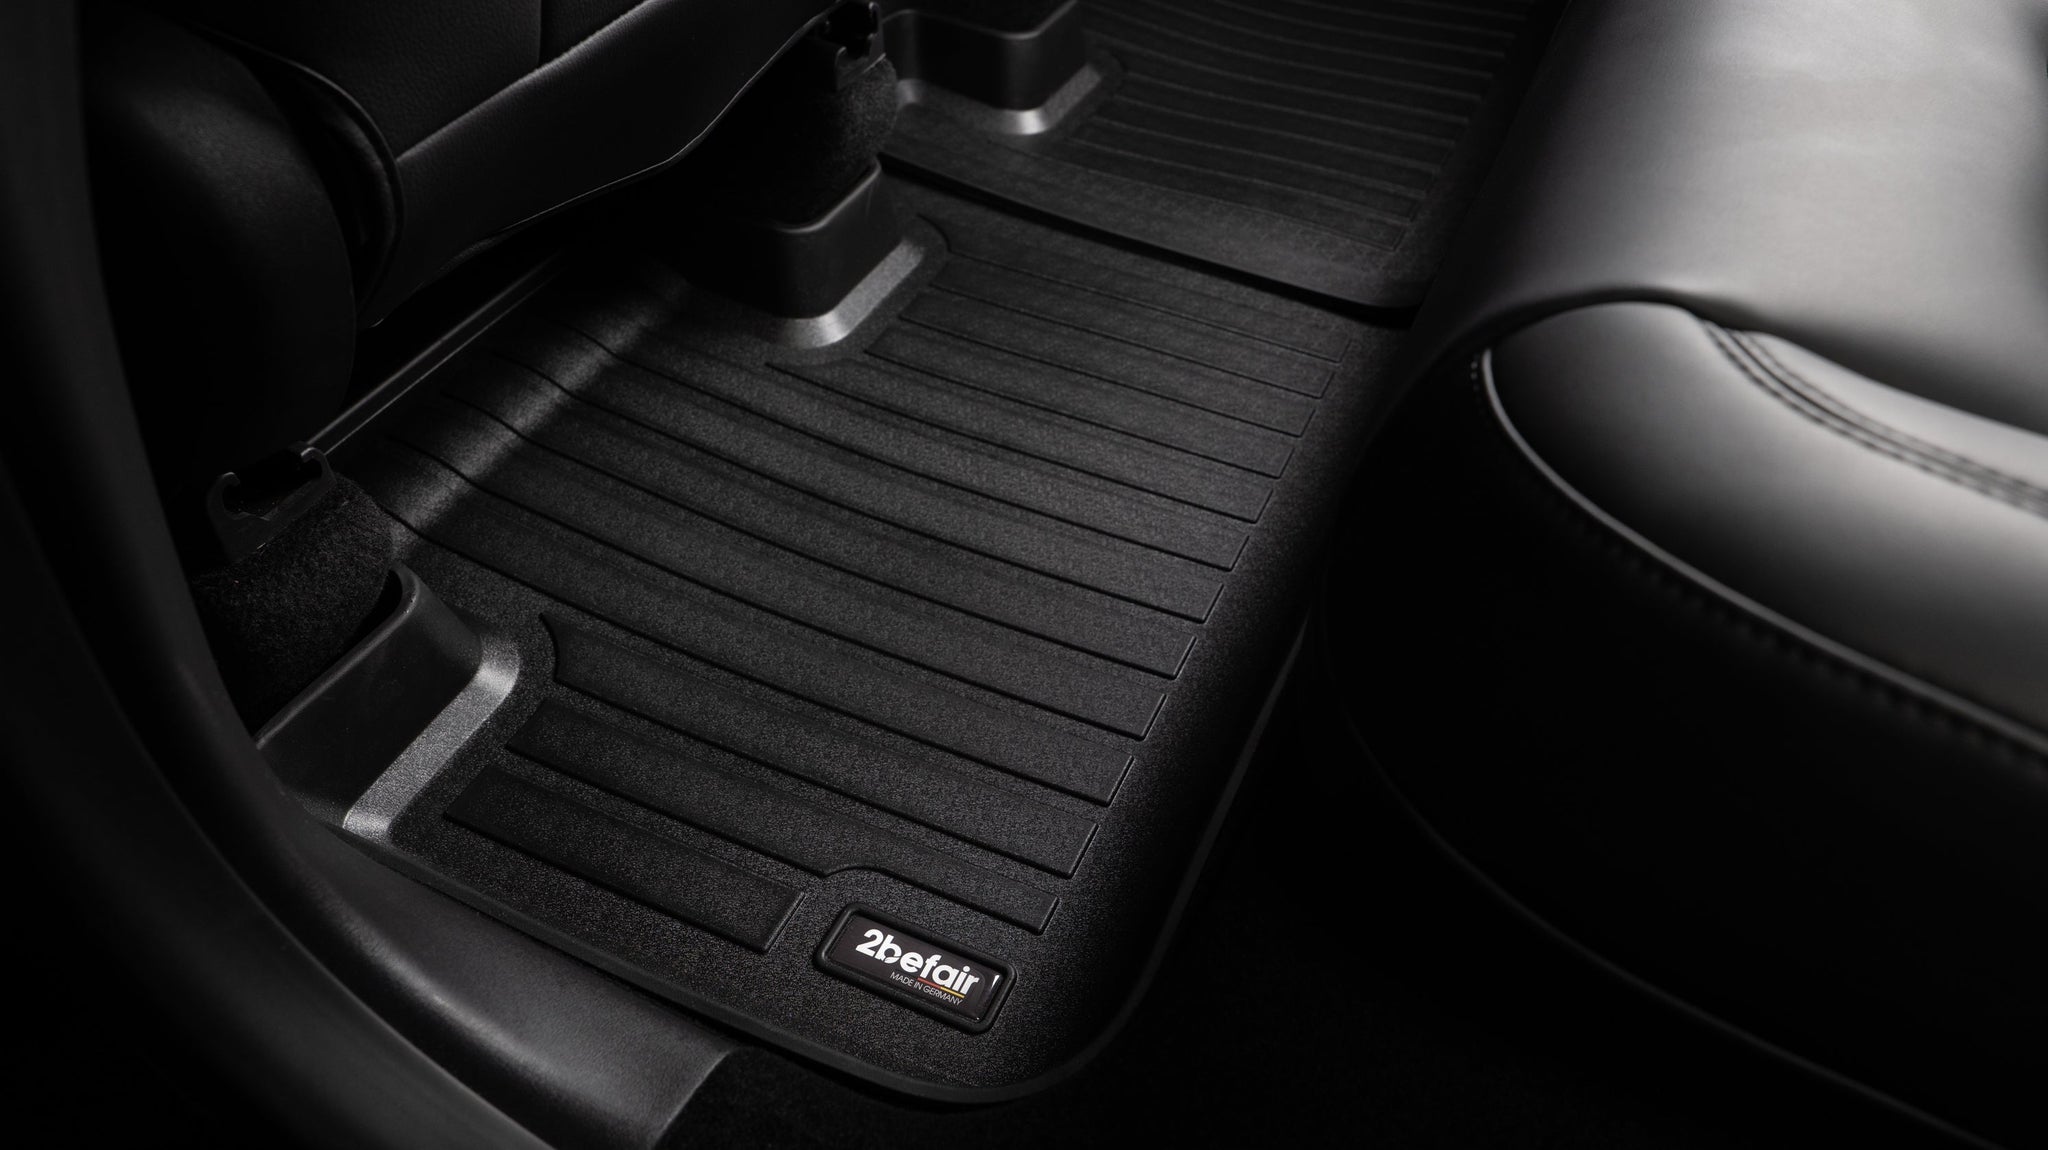 2befair rubber mats complete set for the Tesla Model Y